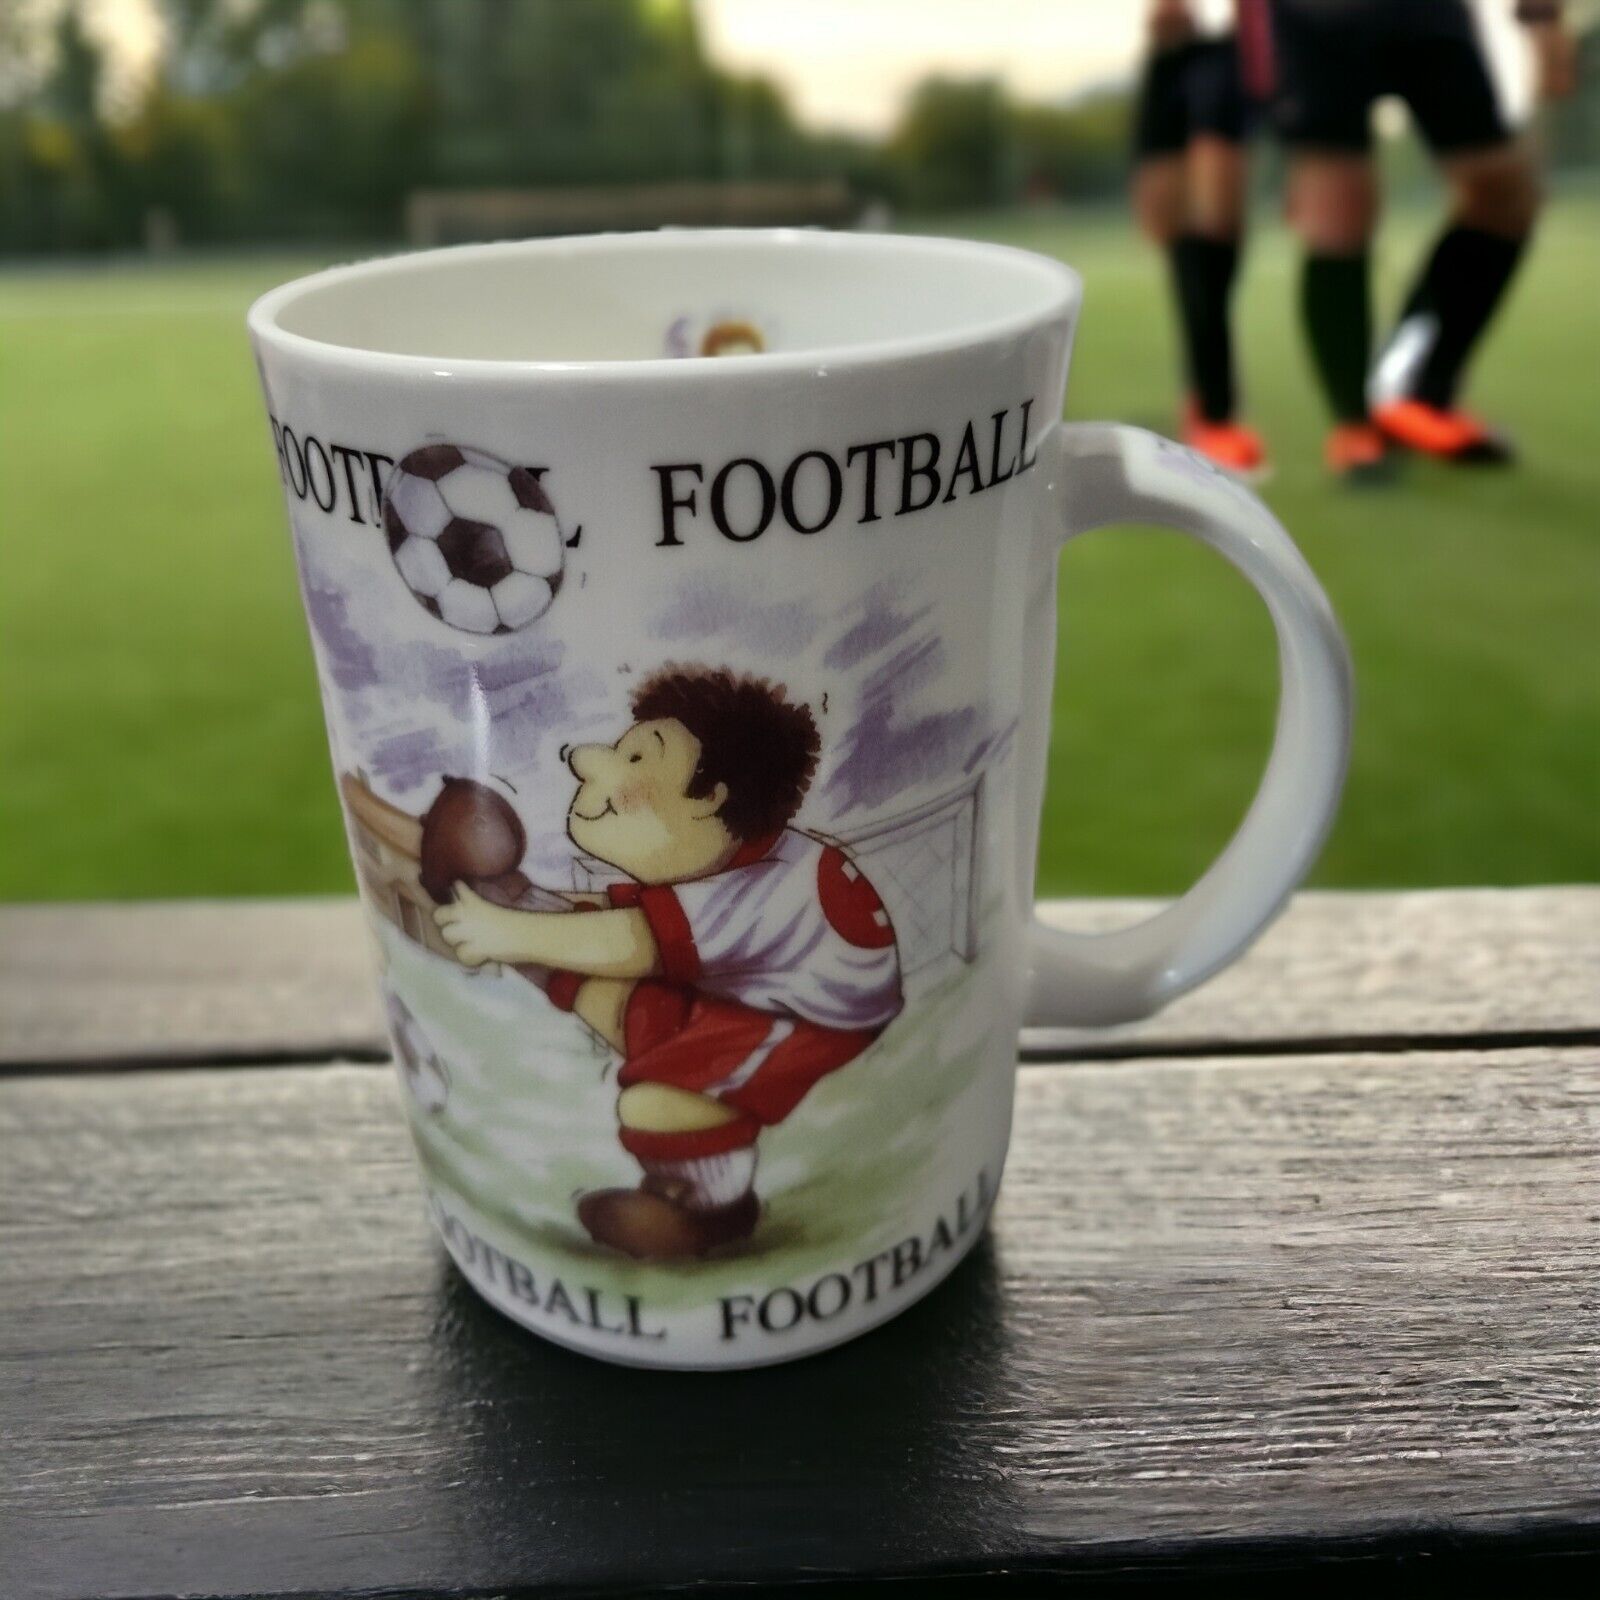 Rose of England “Football” Fine Bone China Mug England Soccer